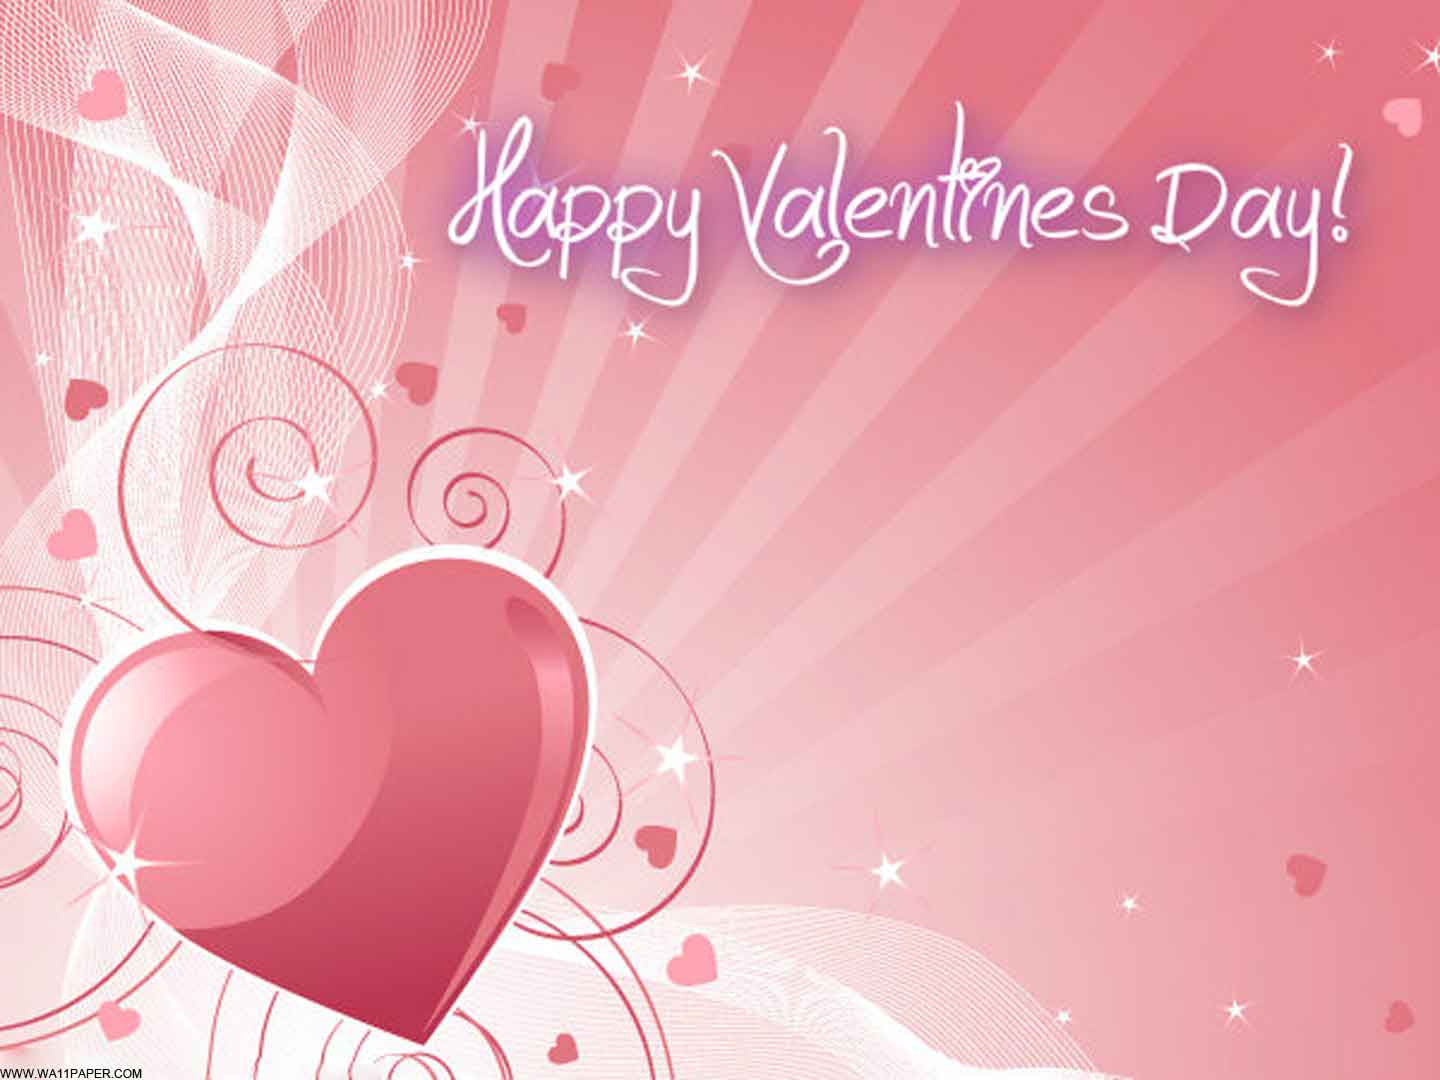 http://4.bp.blogspot.com/-4BQBrAC-A2U/UOxgKLusVJI/AAAAAAAABXs/tOnlzRR0NxE/s1600/valentines+day+hearts+%252812%2529.jpg